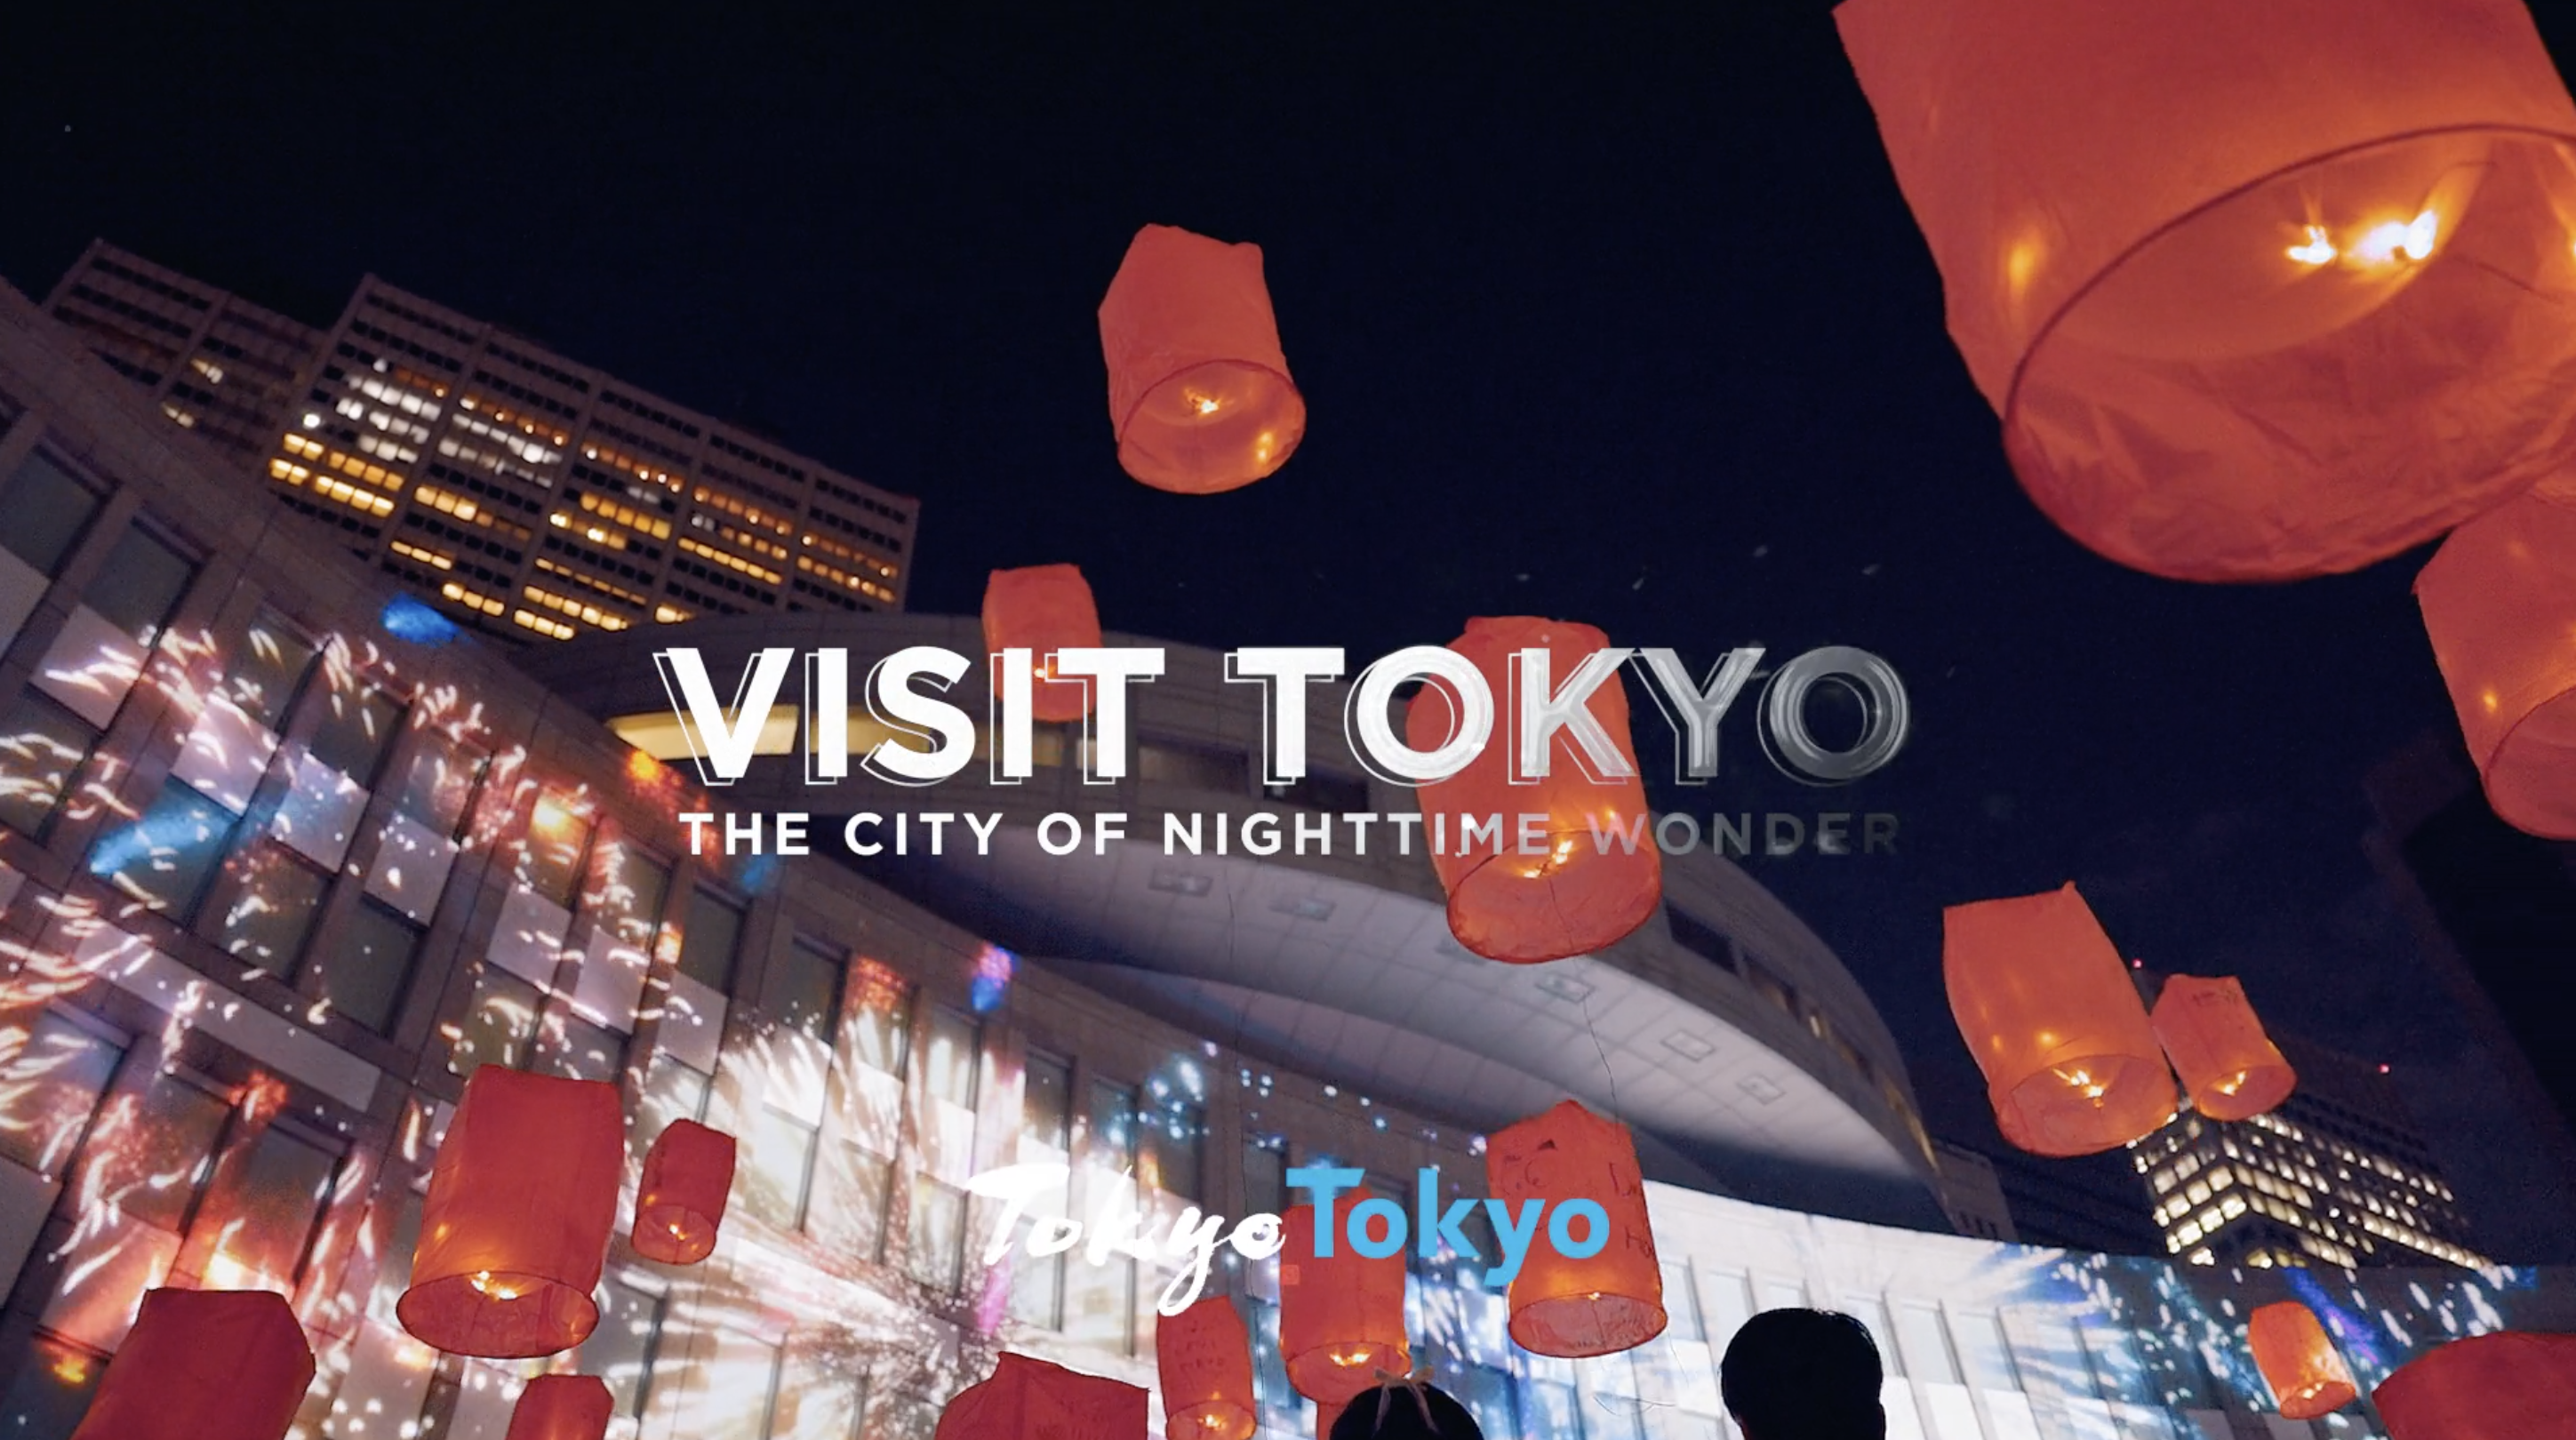 VISIT TOKYO - The City of Nighttime Wonder